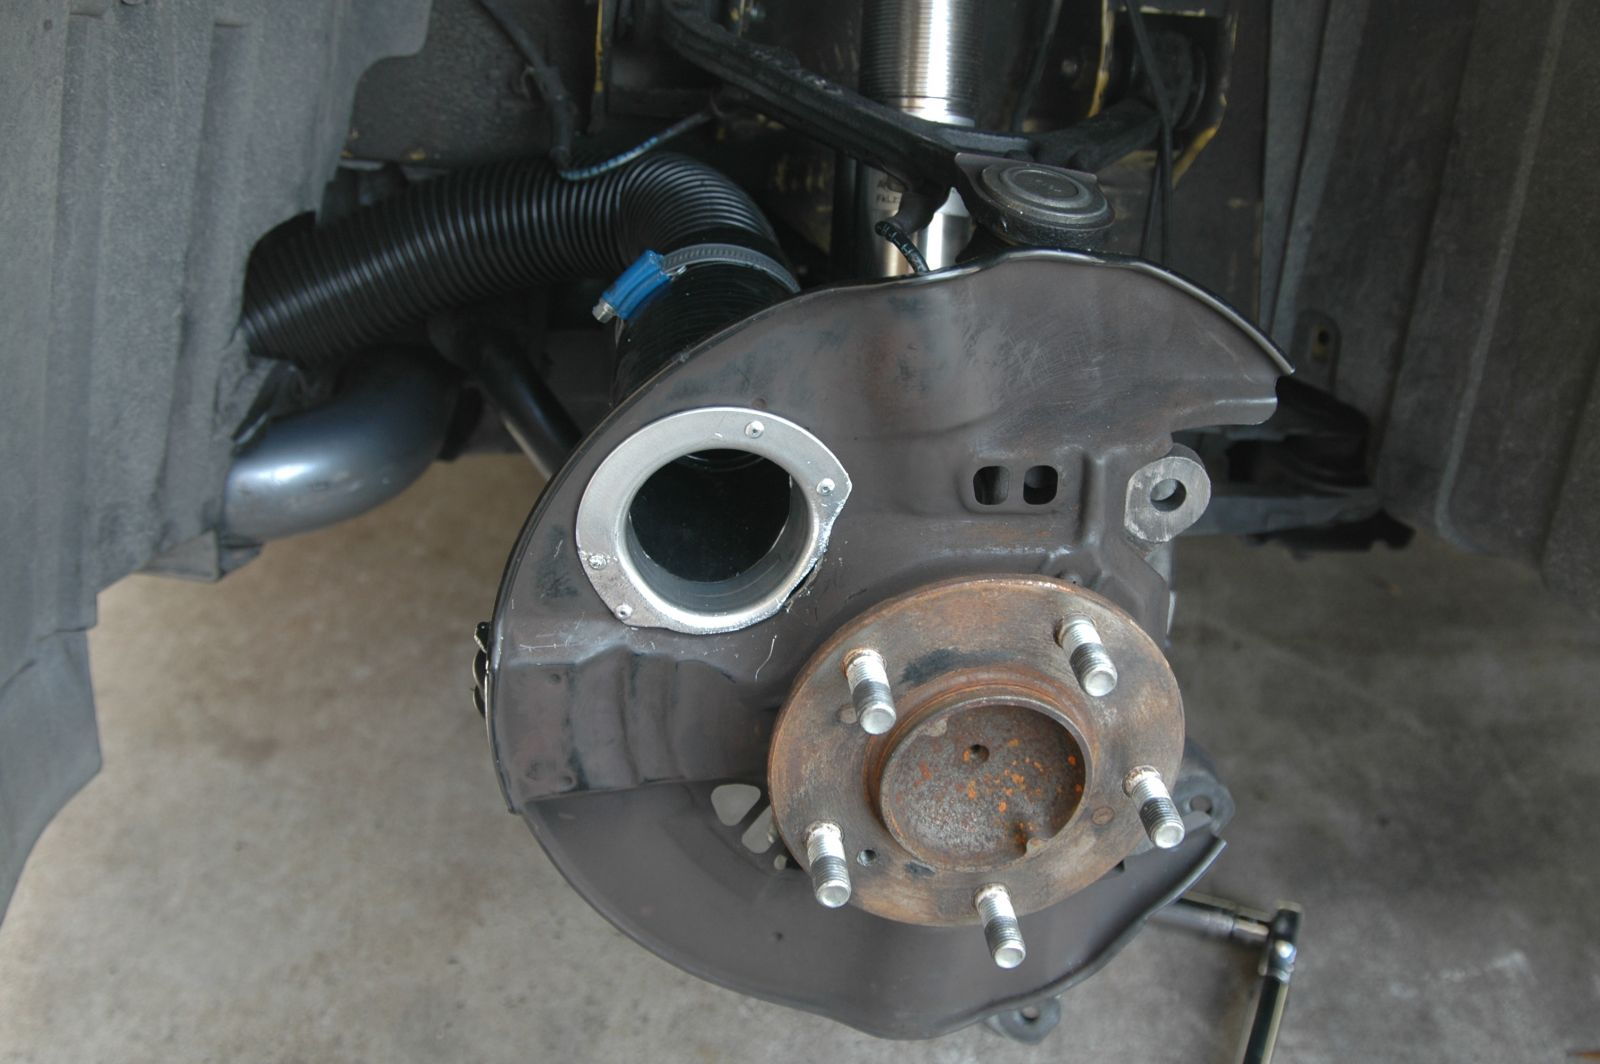 acura integra jdm front end brake vents